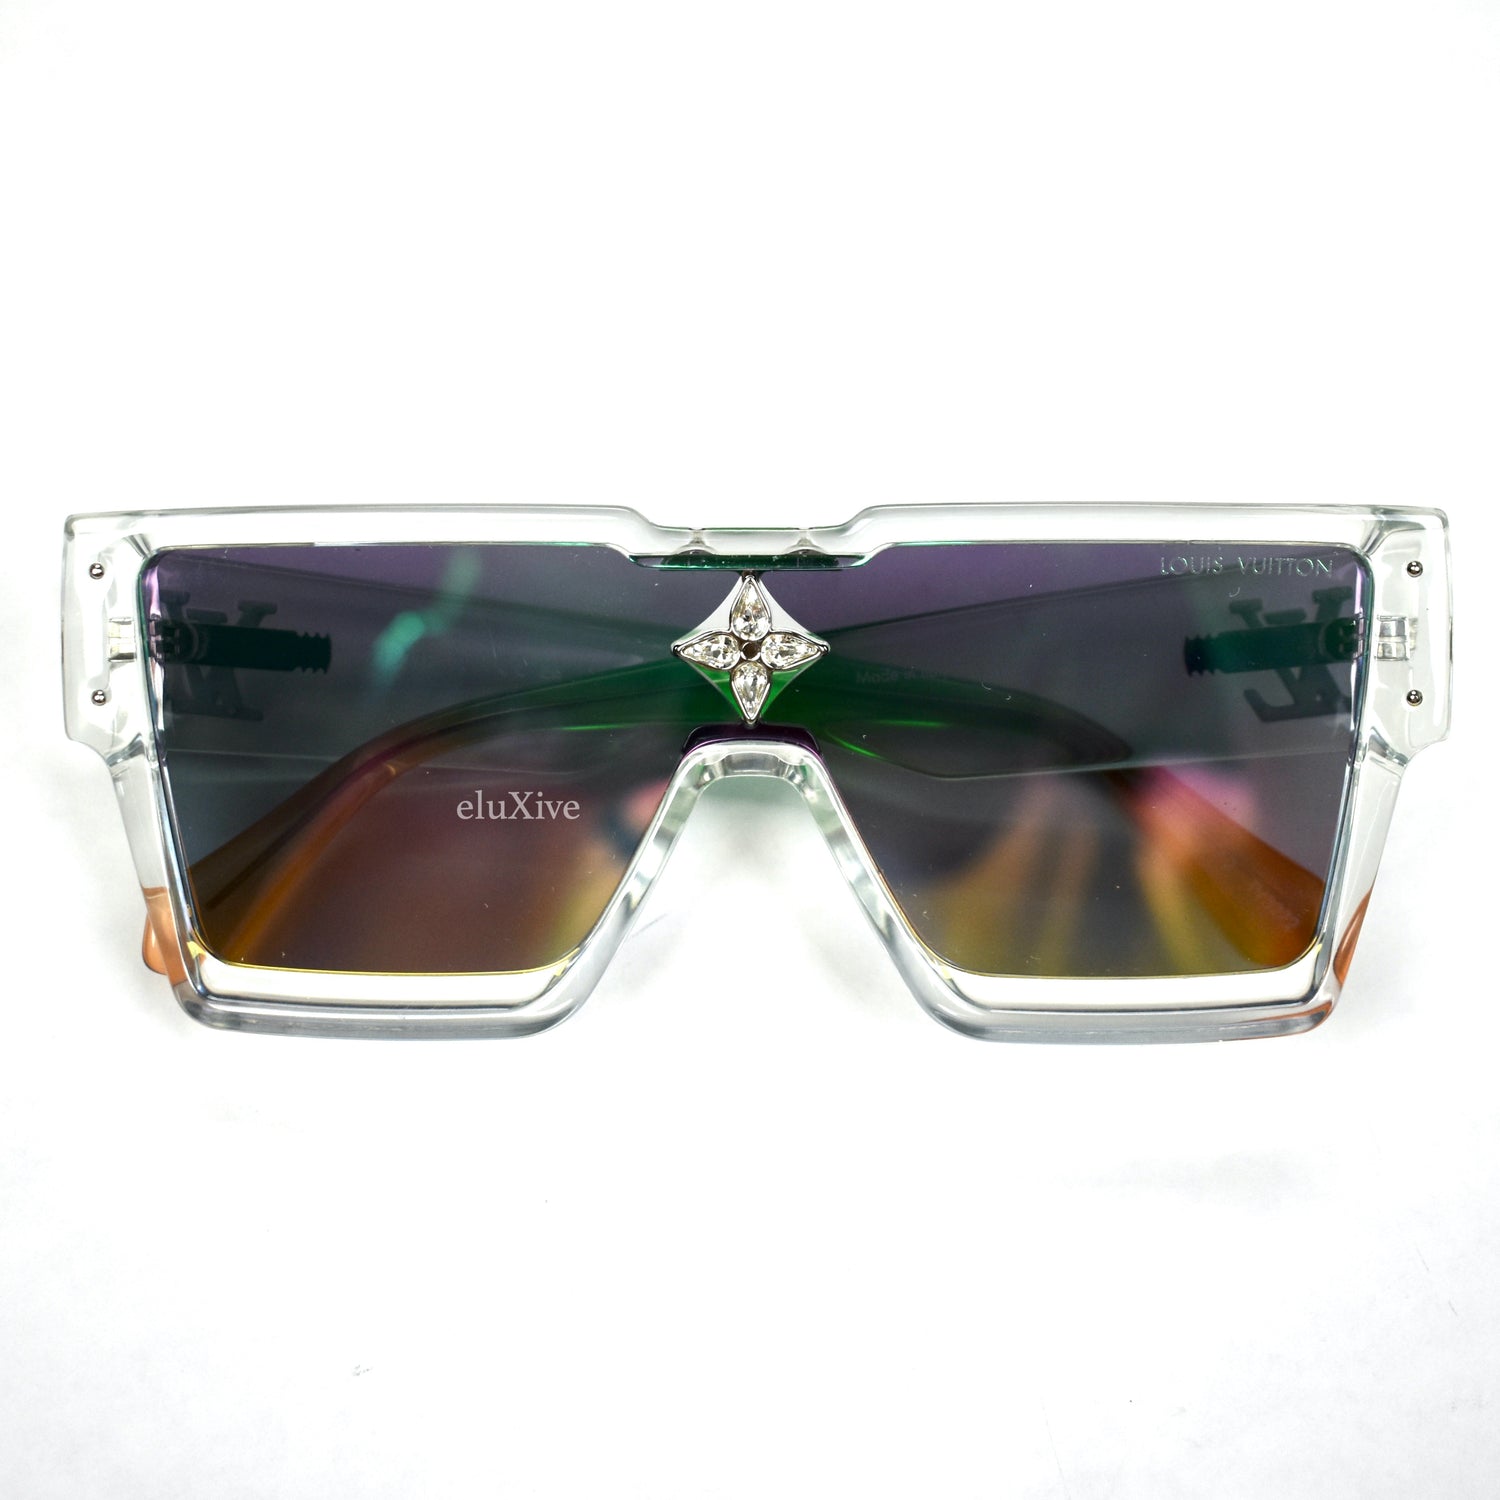 lv cyclone sunglasses price